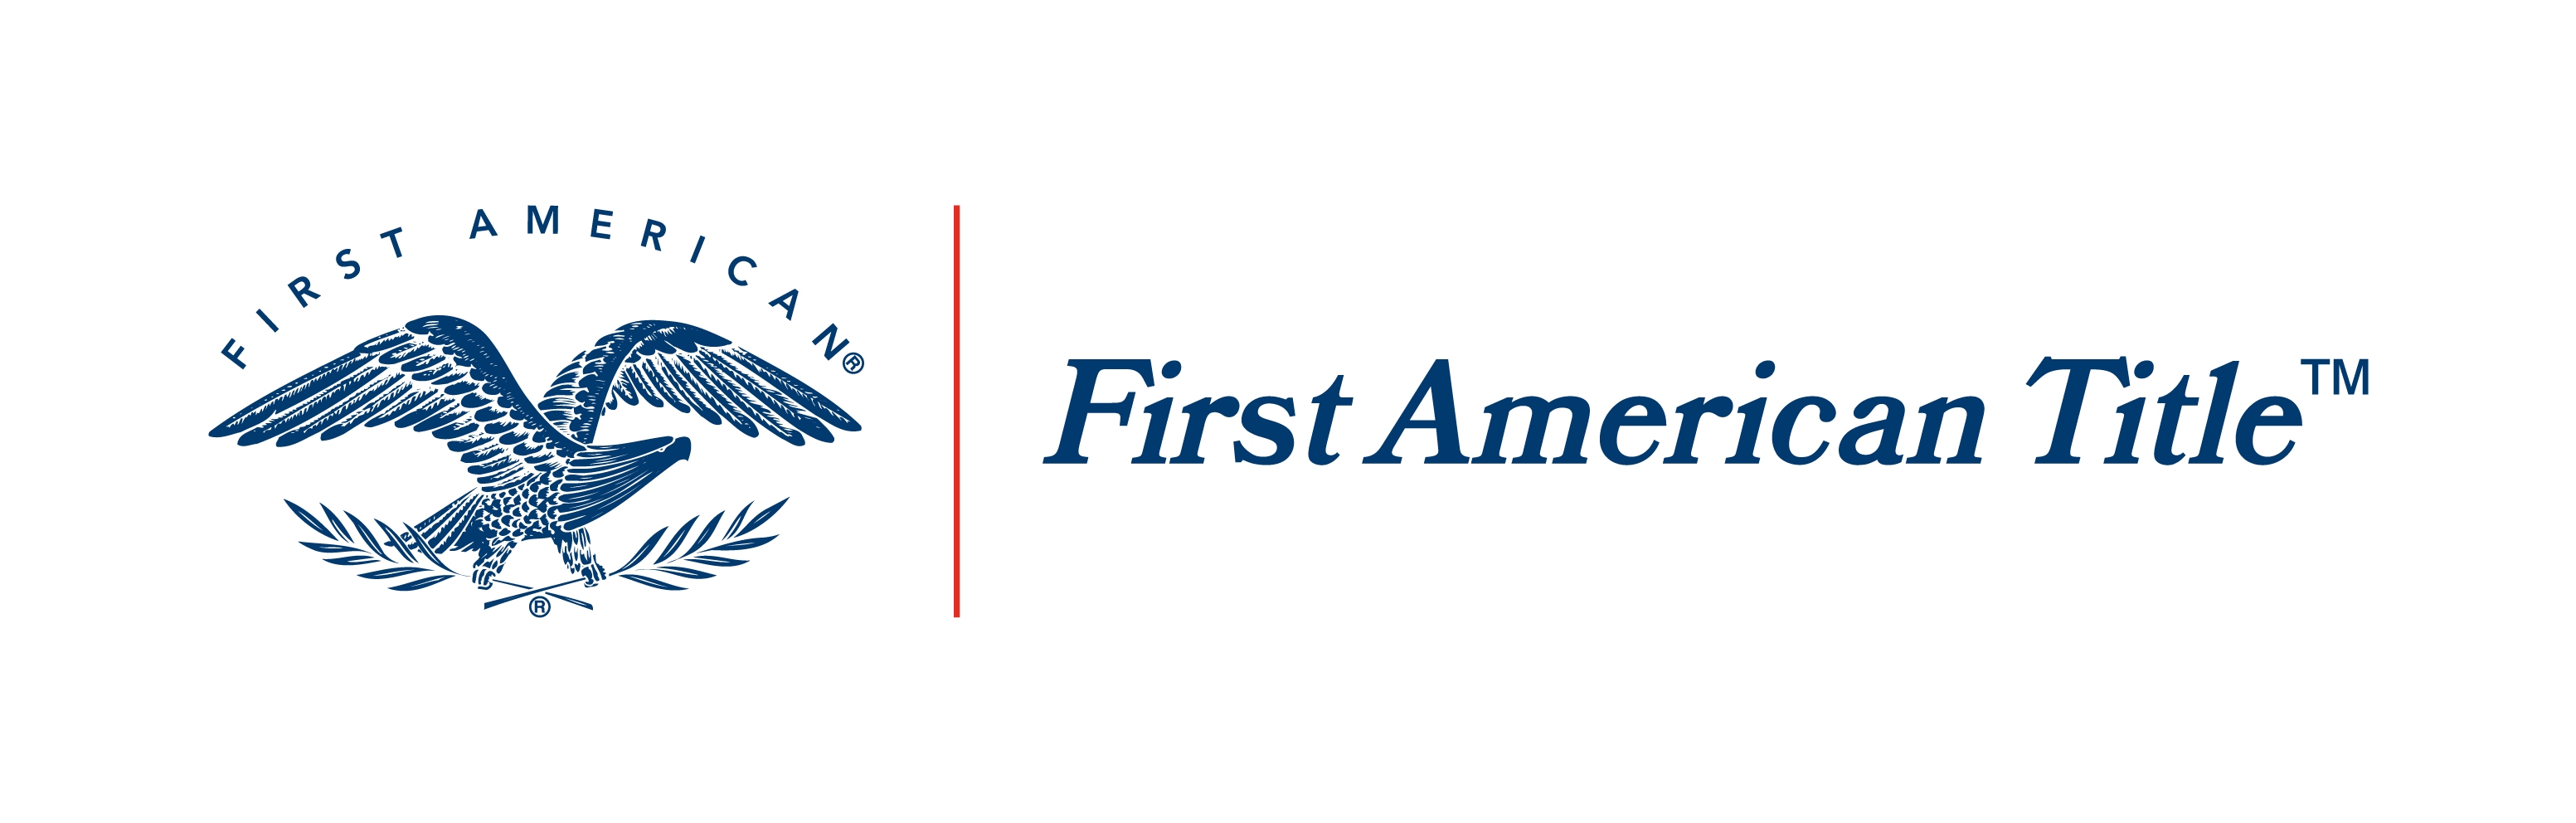 First American Title Insurance Company Company Logo